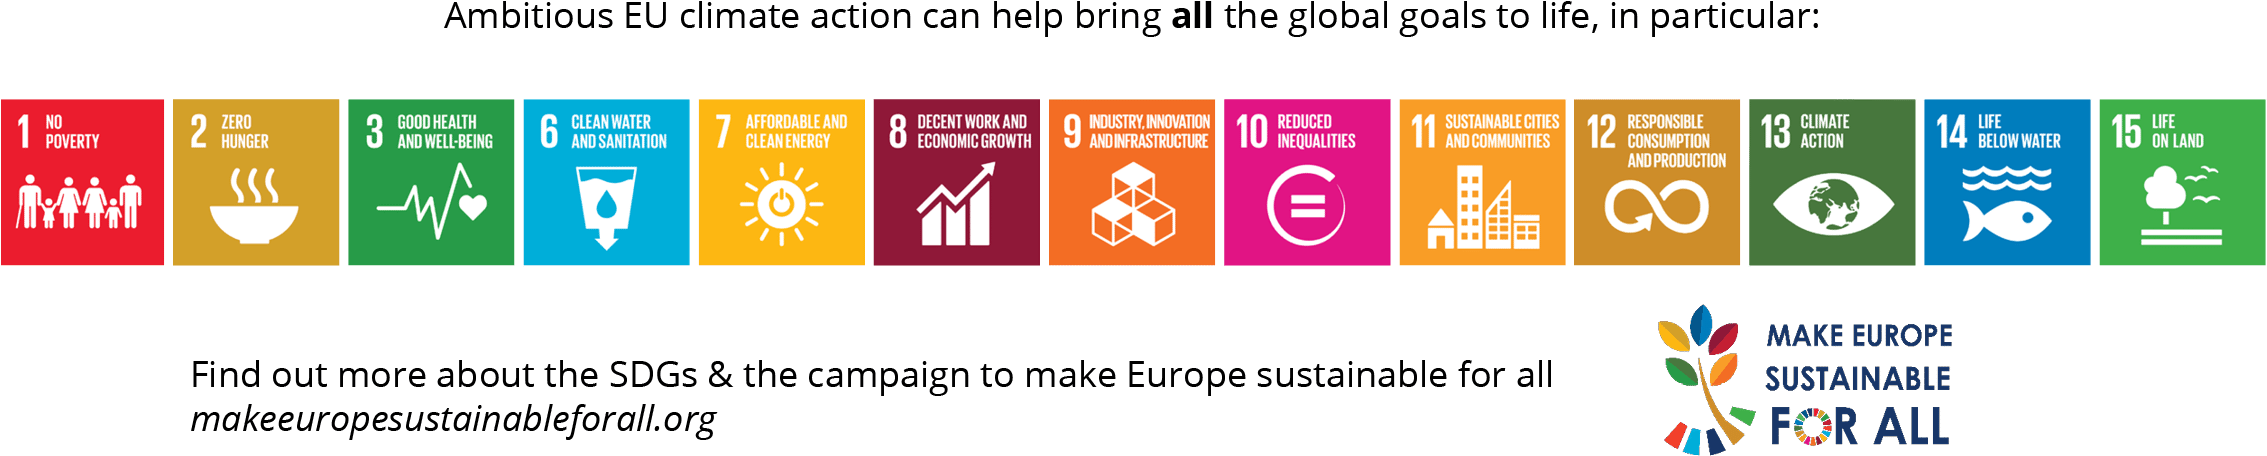 Sustainable Development Goals E U Climate Action